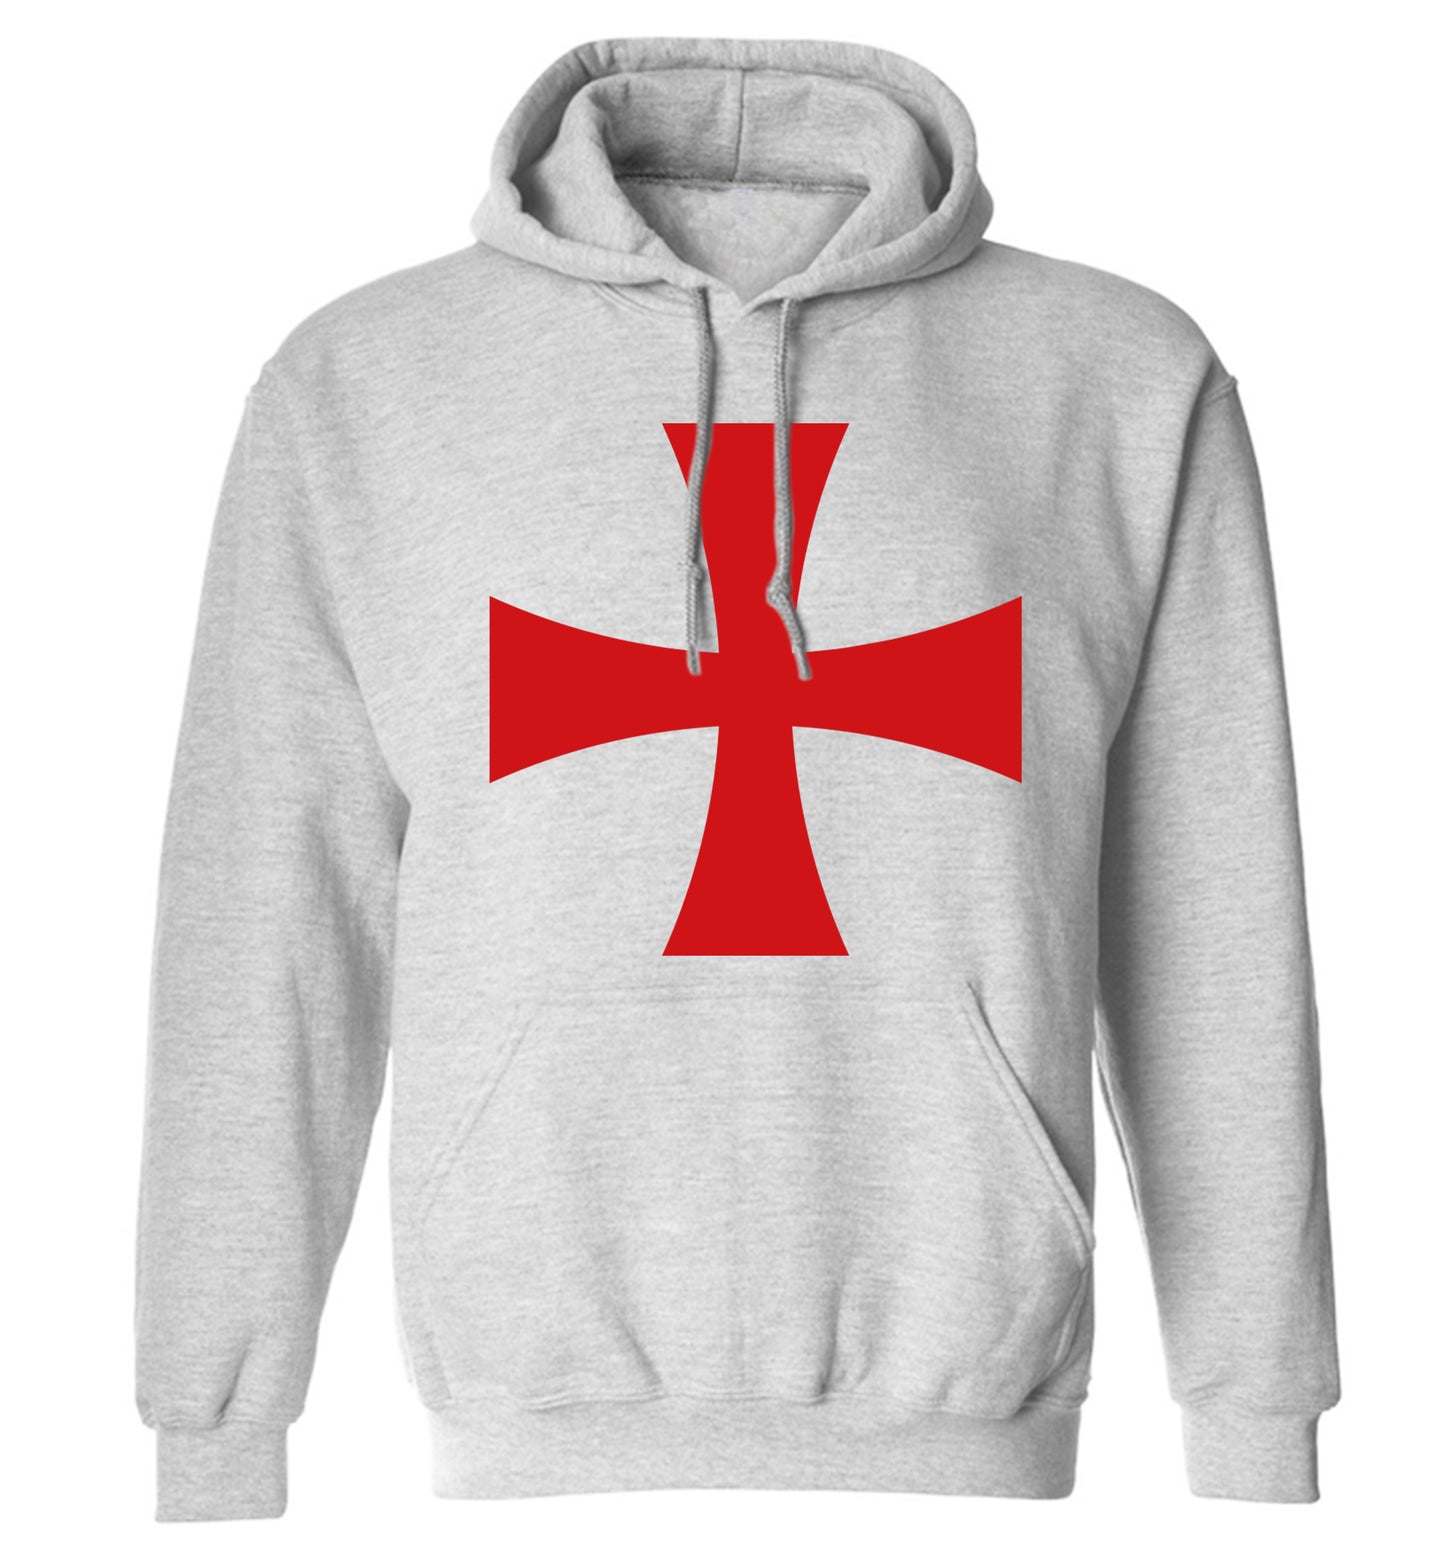 Knights Templar cross adults unisex grey hoodie 2XL